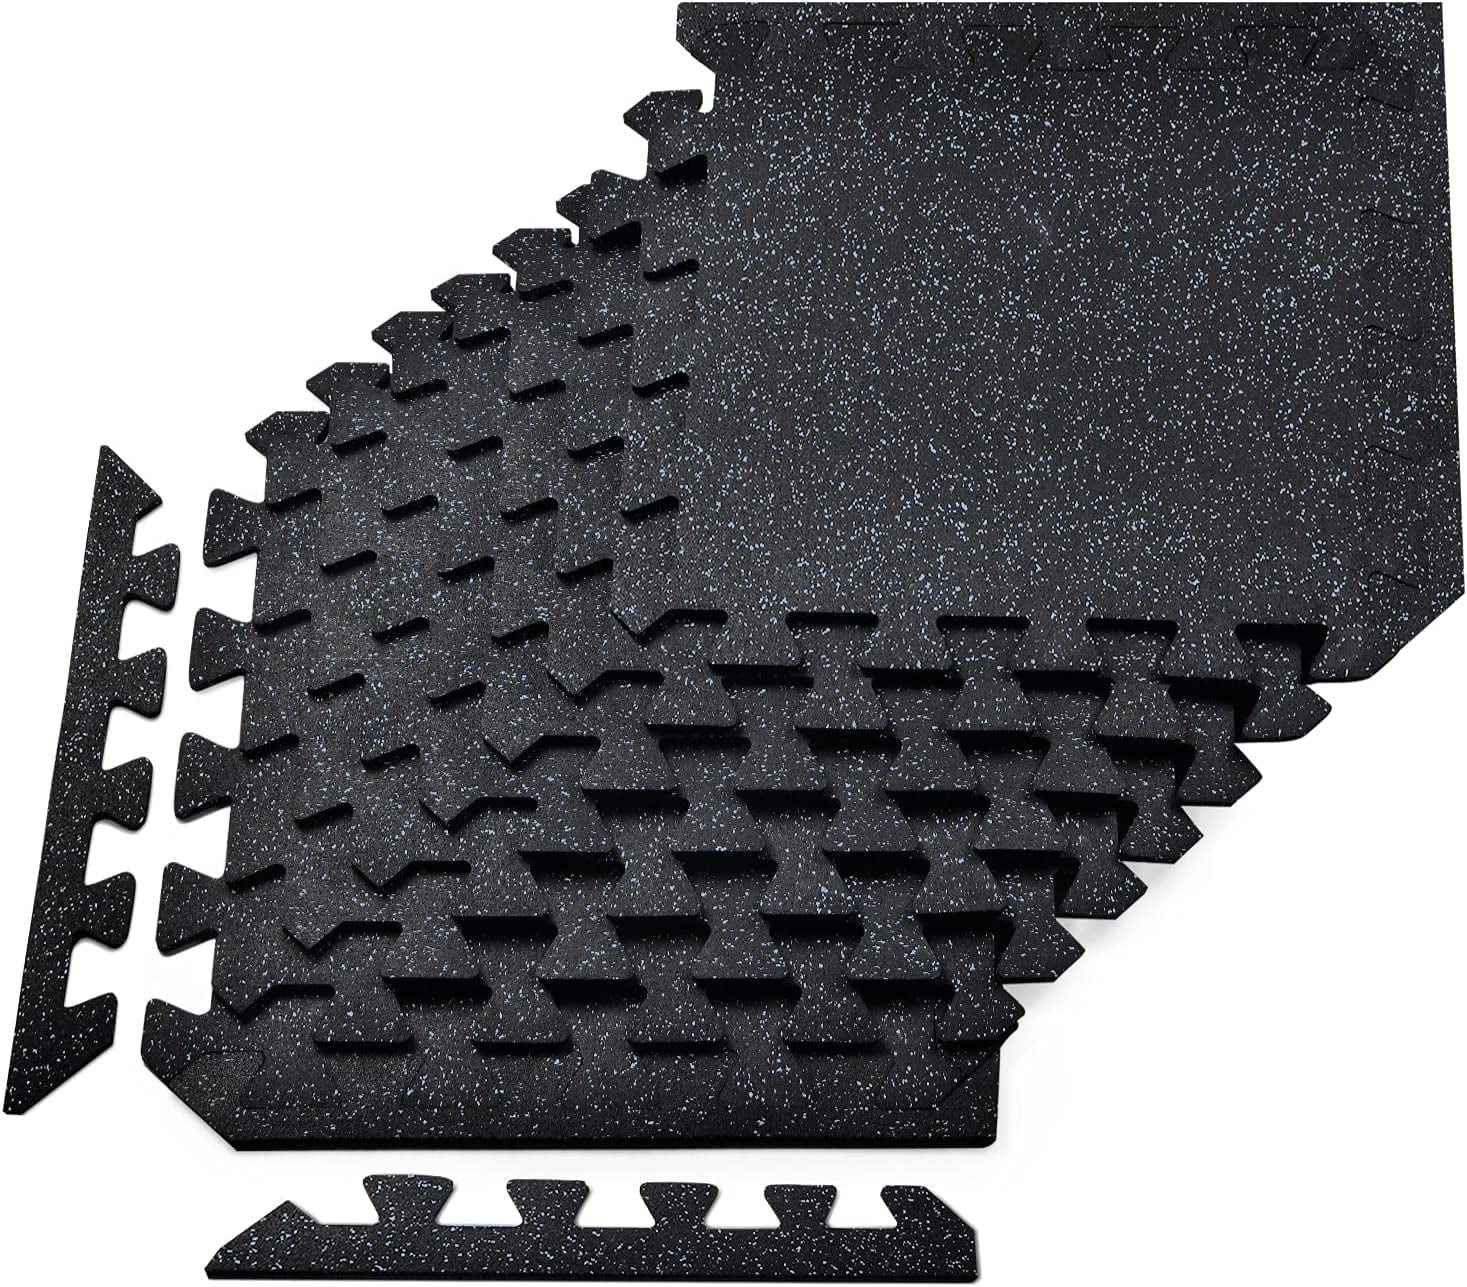 Safety Slip-Resistant Rubber Mats, Interlocking, 3' X 3' X 3/8, 1 Mat